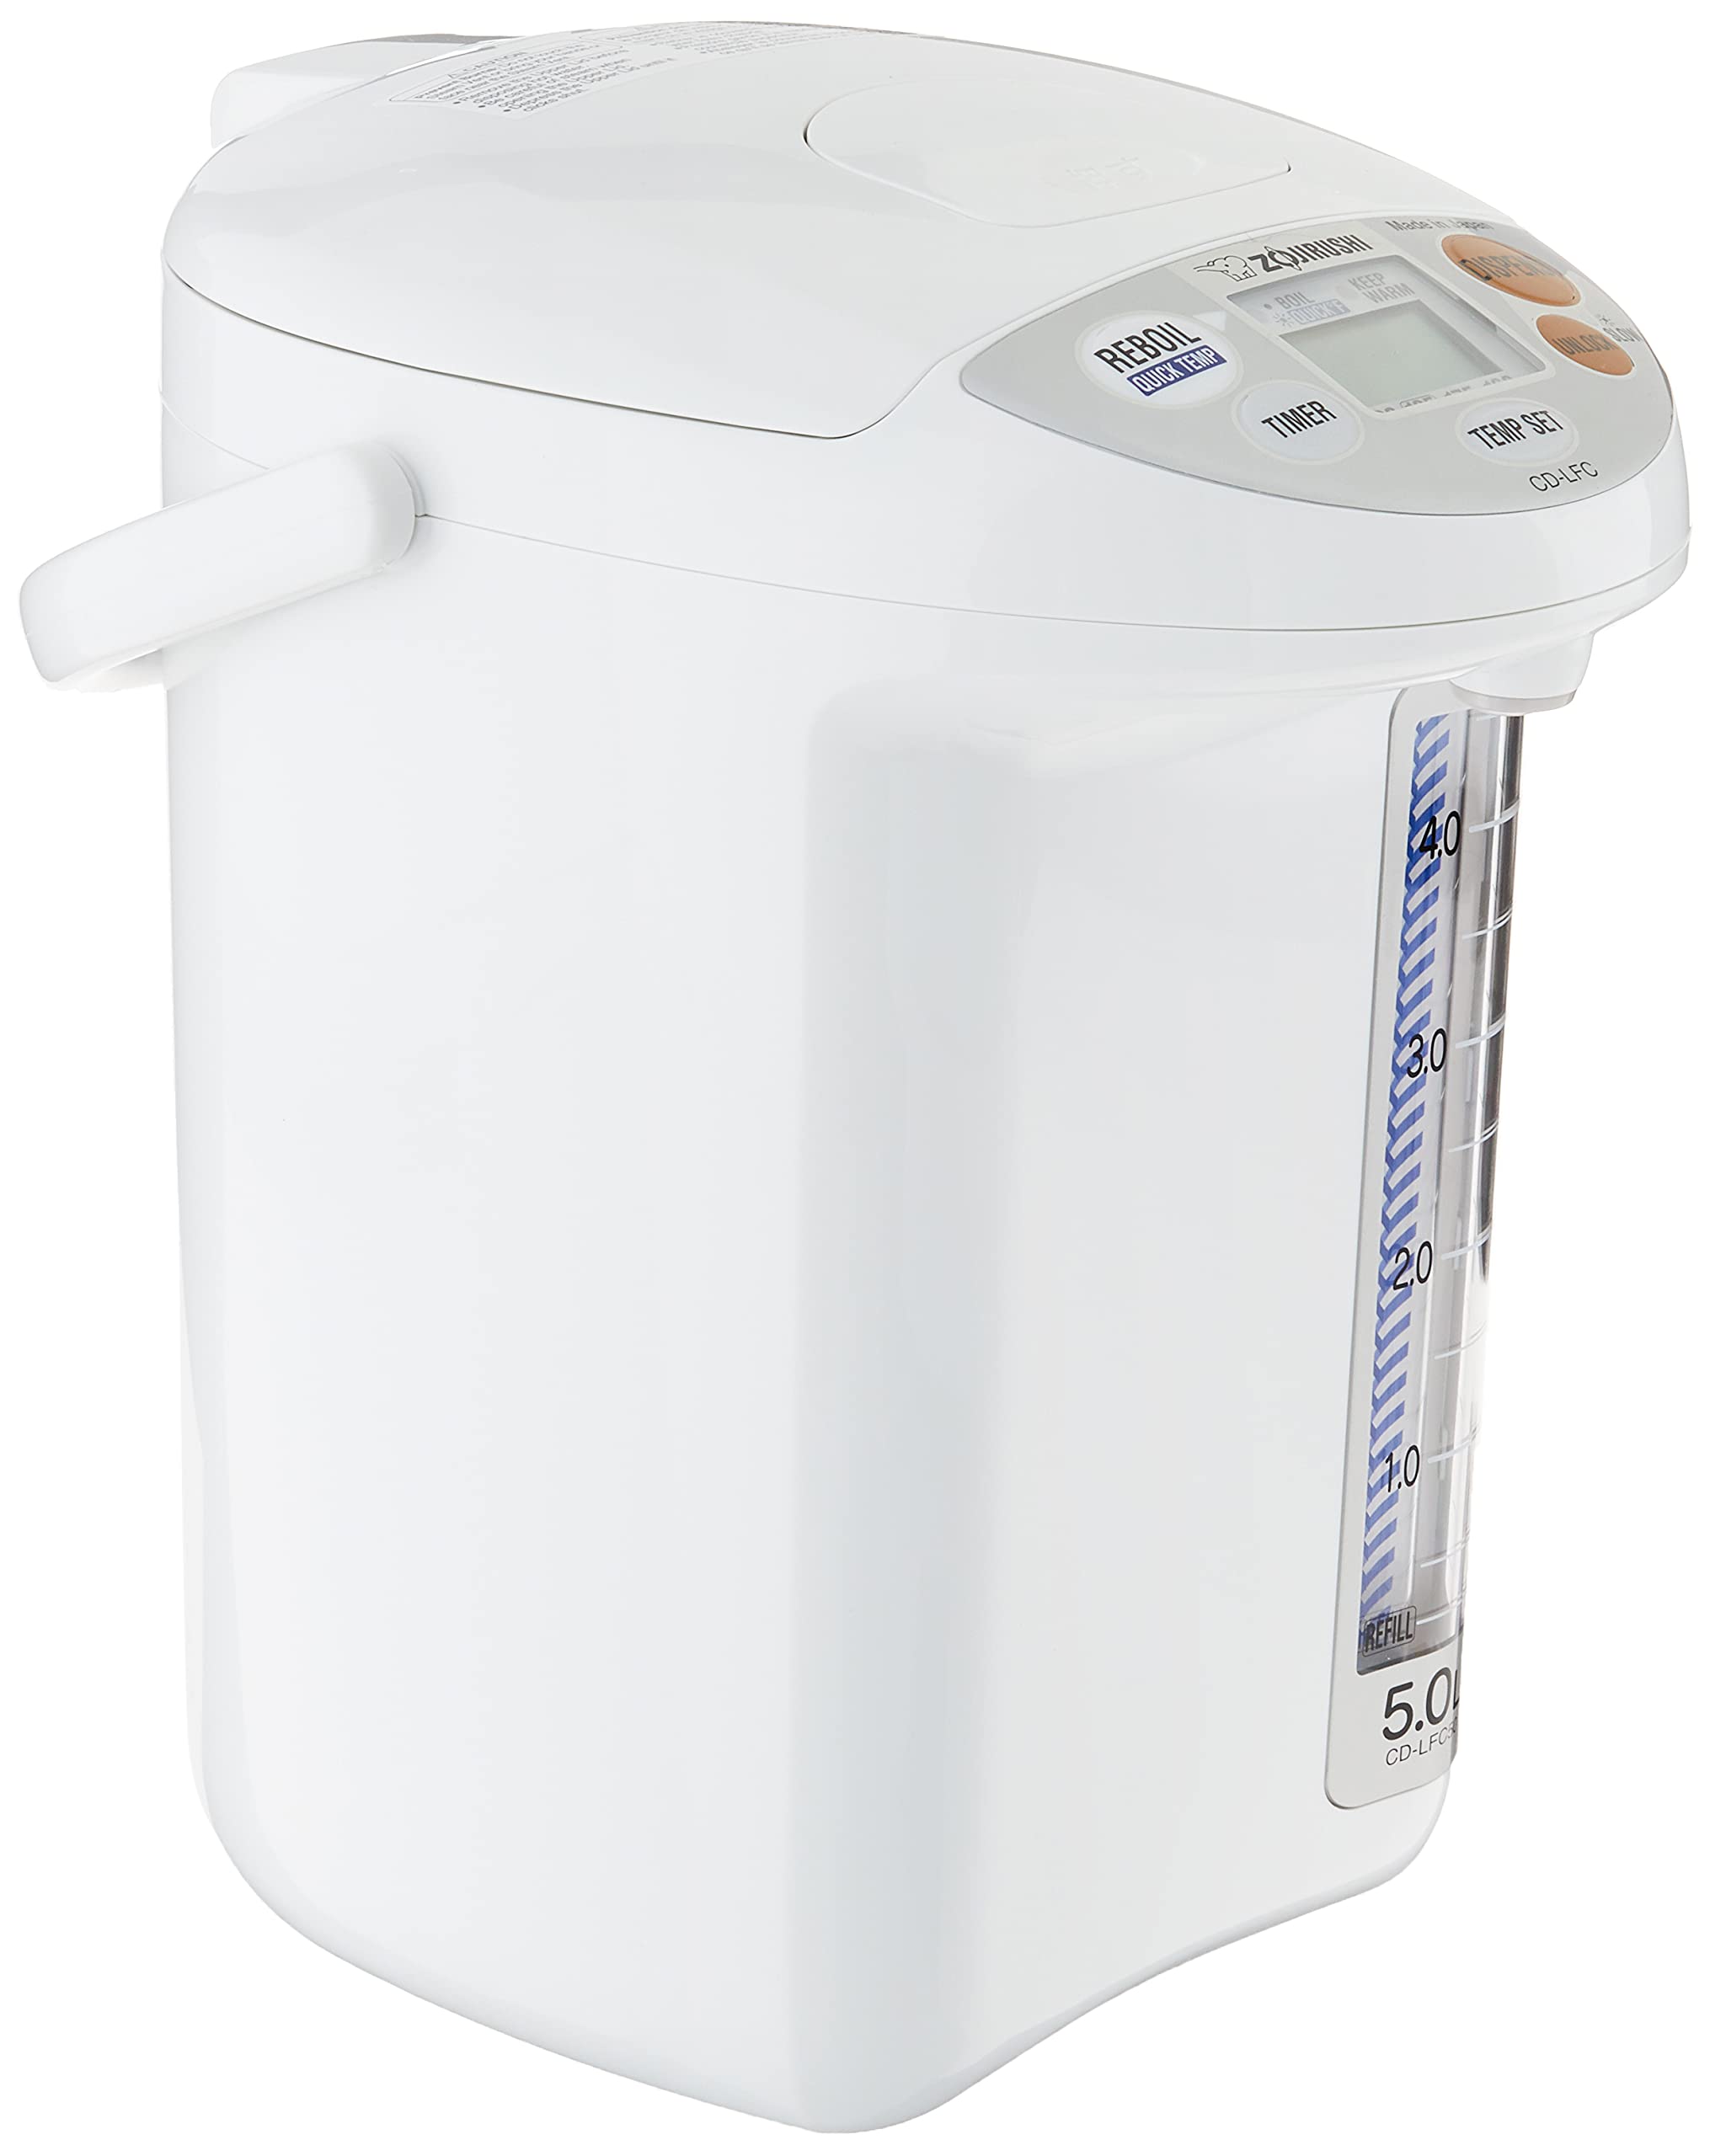 Zojirushi Micom Water Boiler and Warmer